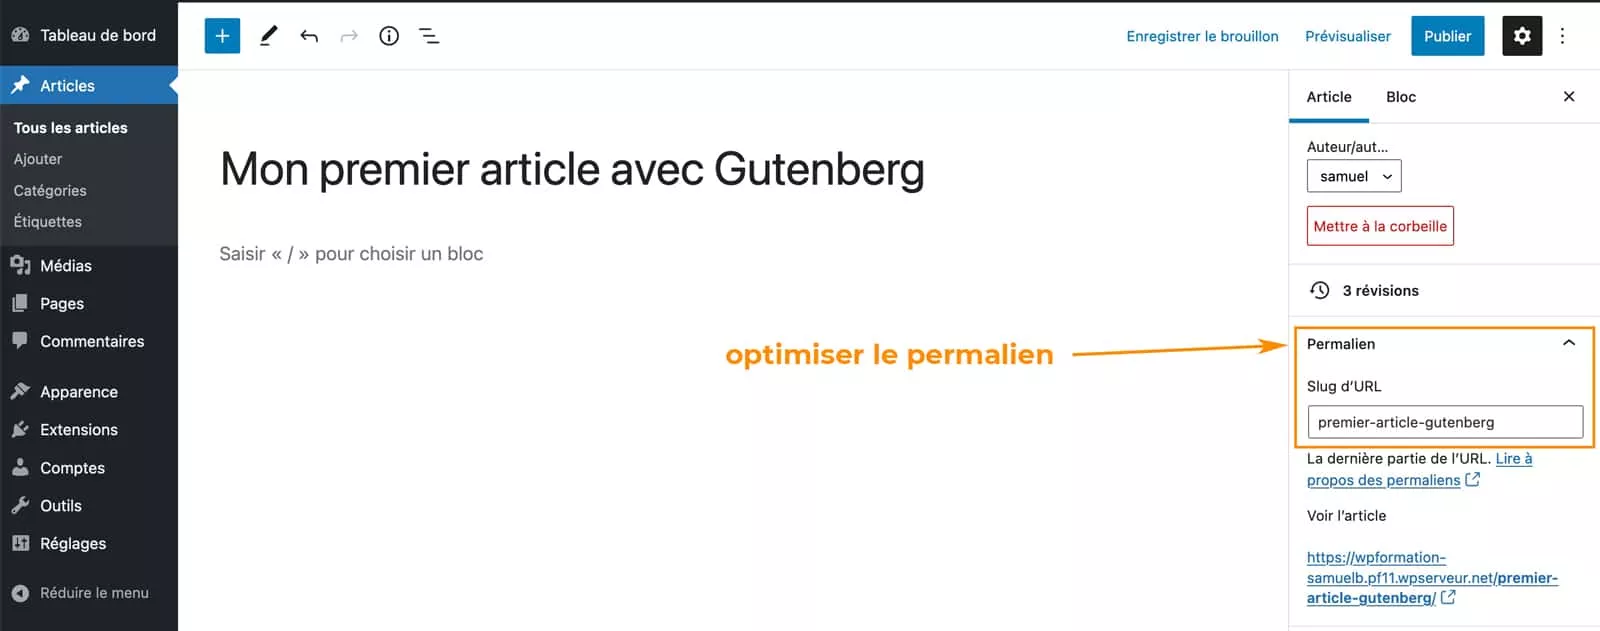 creer articles wordpress avec gutenberg 57 | Écrire des articles avec Gutenberg - Mode d'emploi